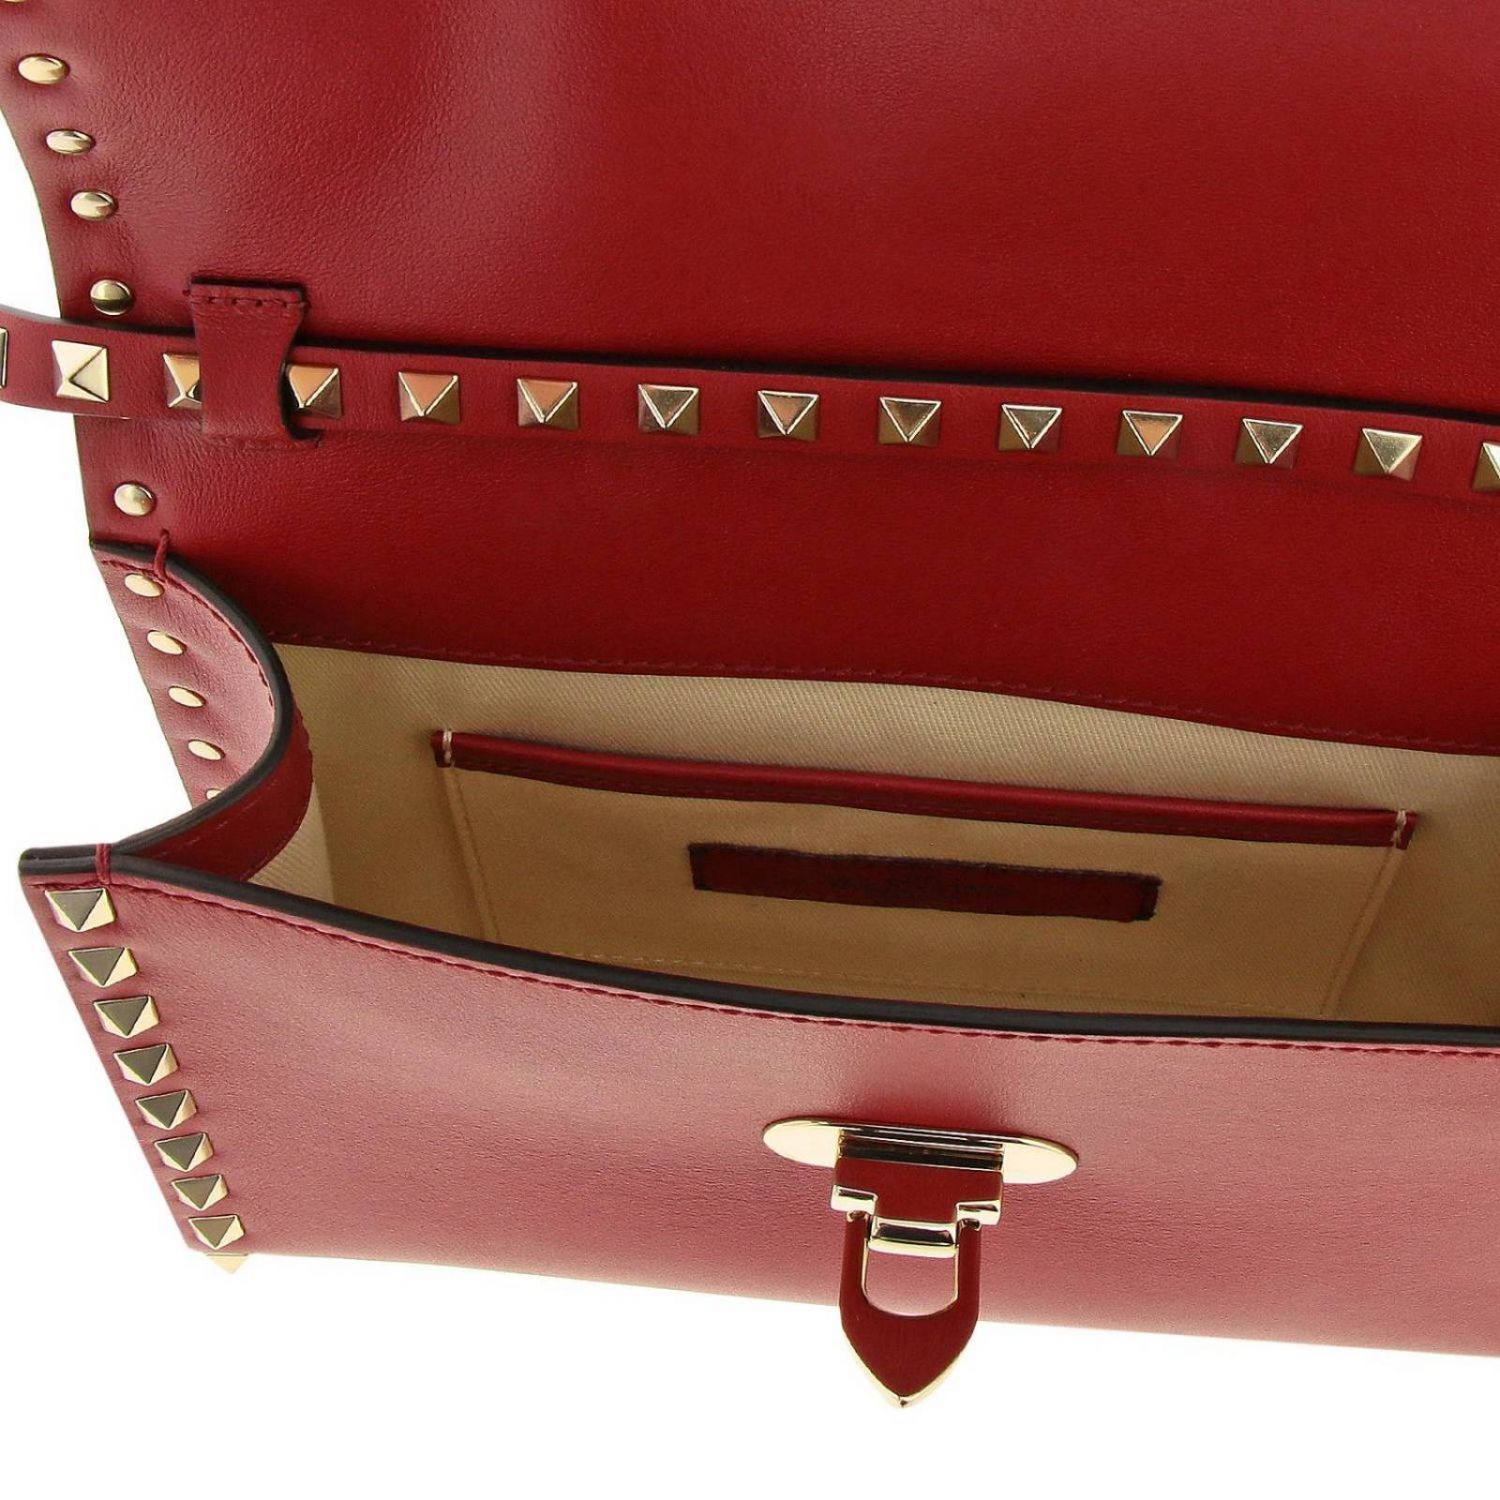 VALENTINO GARAVANI: Rockstud bag in genuine leather with metal hook and ...